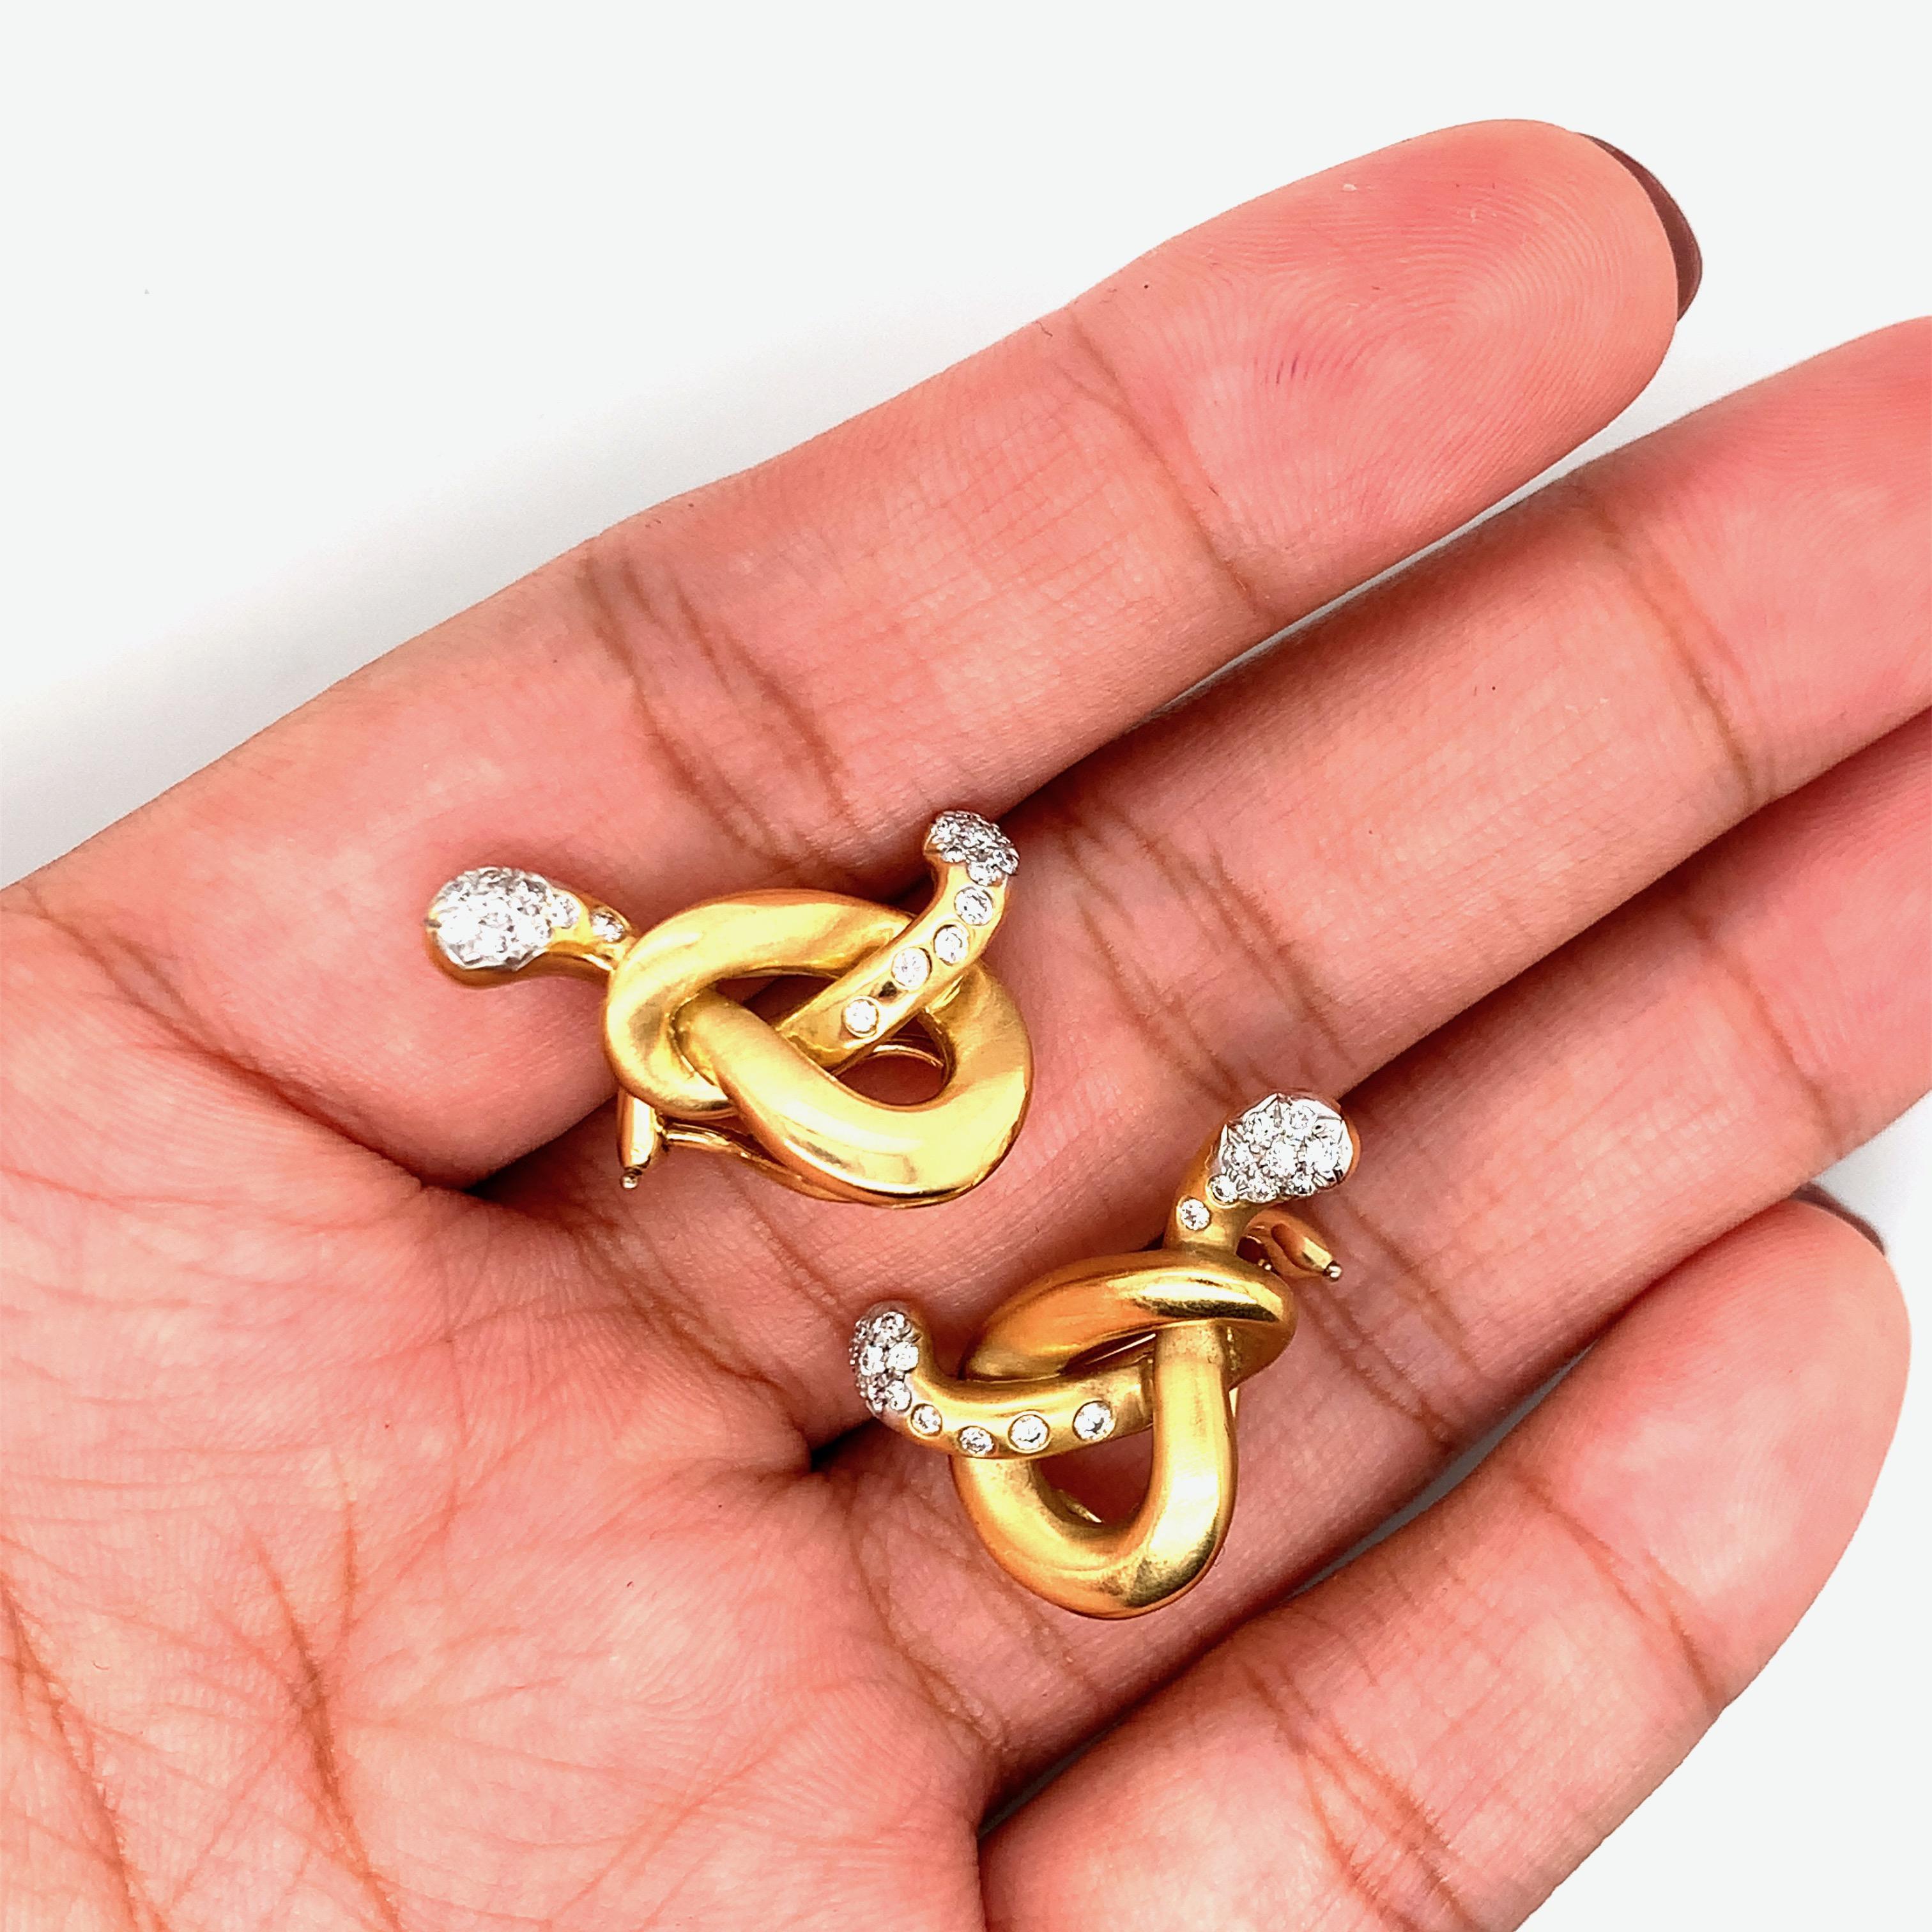 Angela Cummings for Assael 18 karat yellow gold earrings , featuring pretzel knot design, set with approx. 0.38ctw G/VS diamonds.  Marked: Cummings / Assael / 750. Total weight: 16.1 grams.  Earrings measure 1